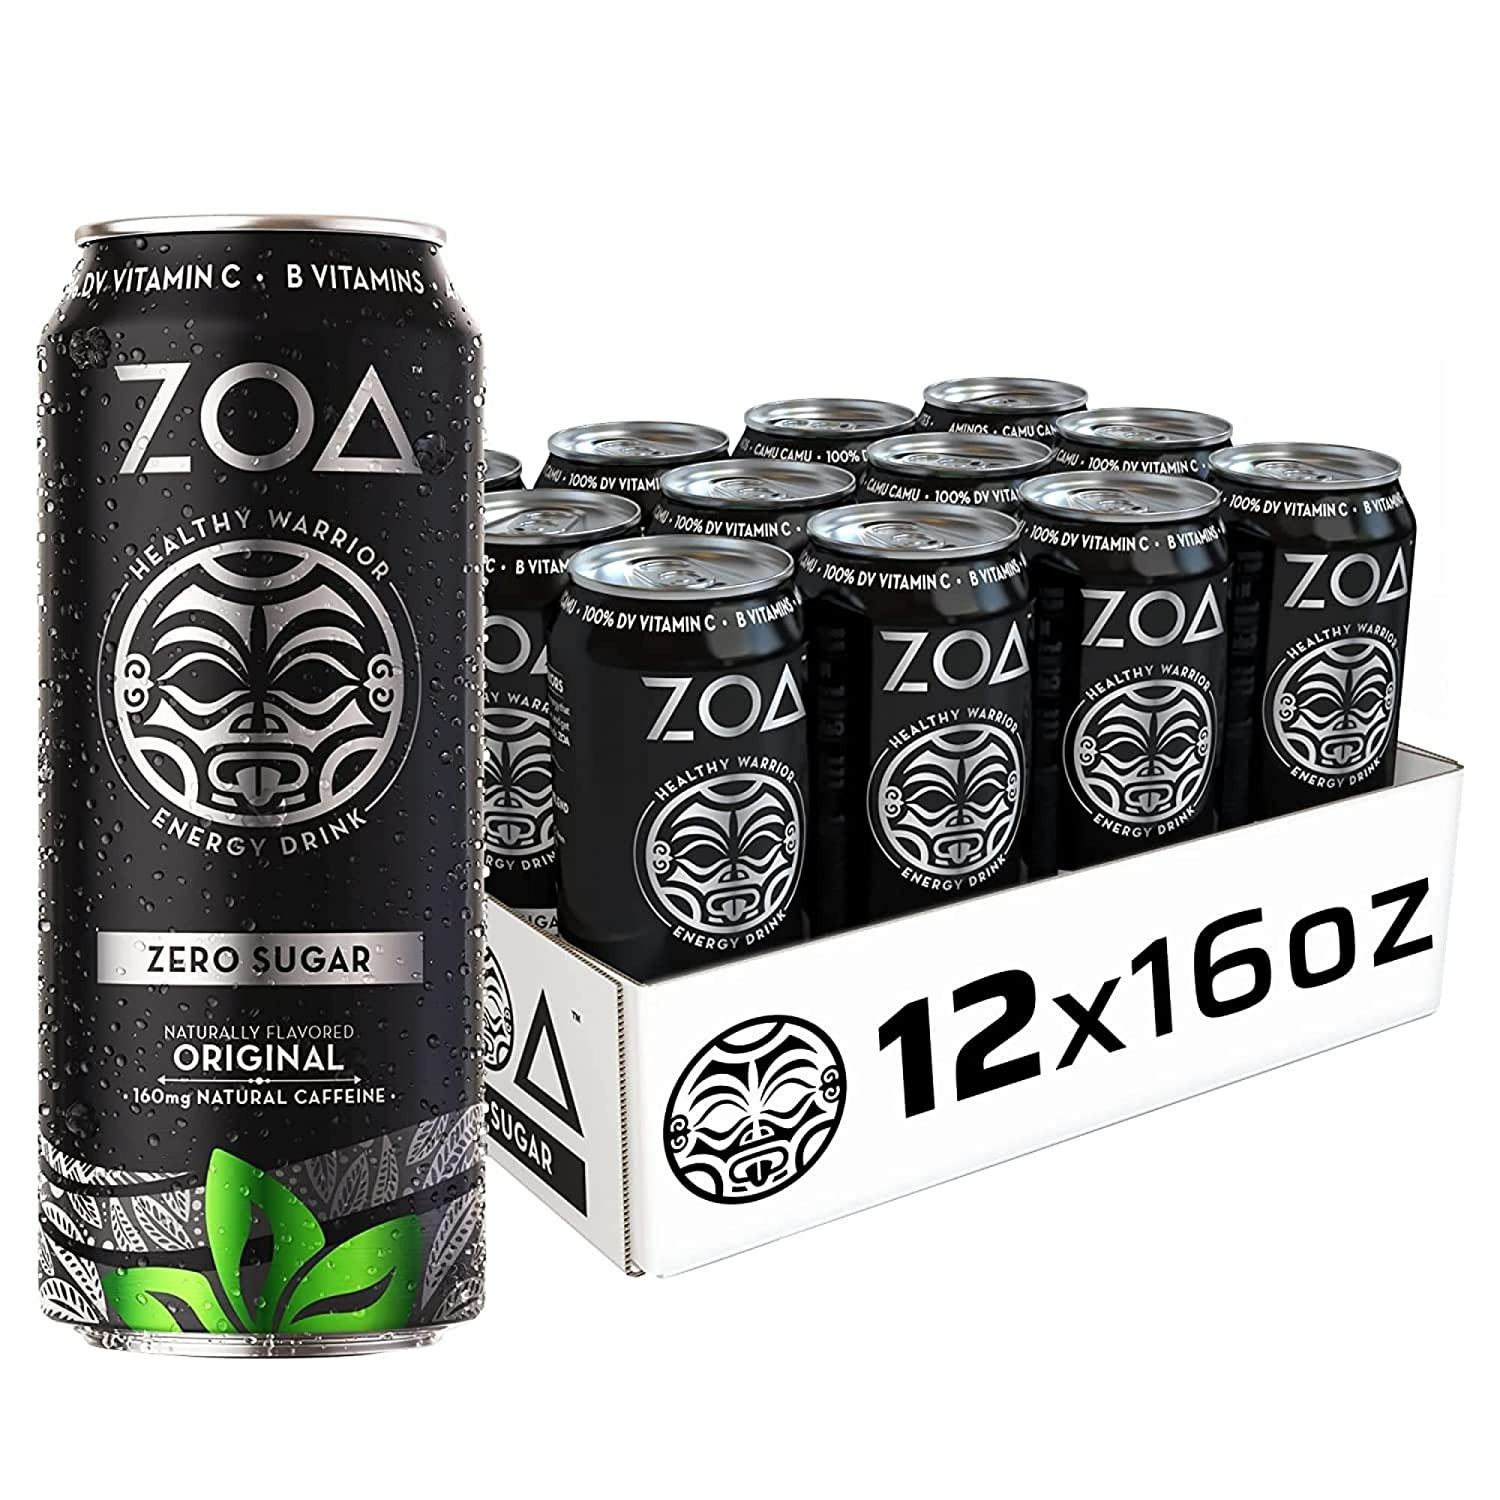 Zoa Zero Sugar Energy Drink - 12 Pack